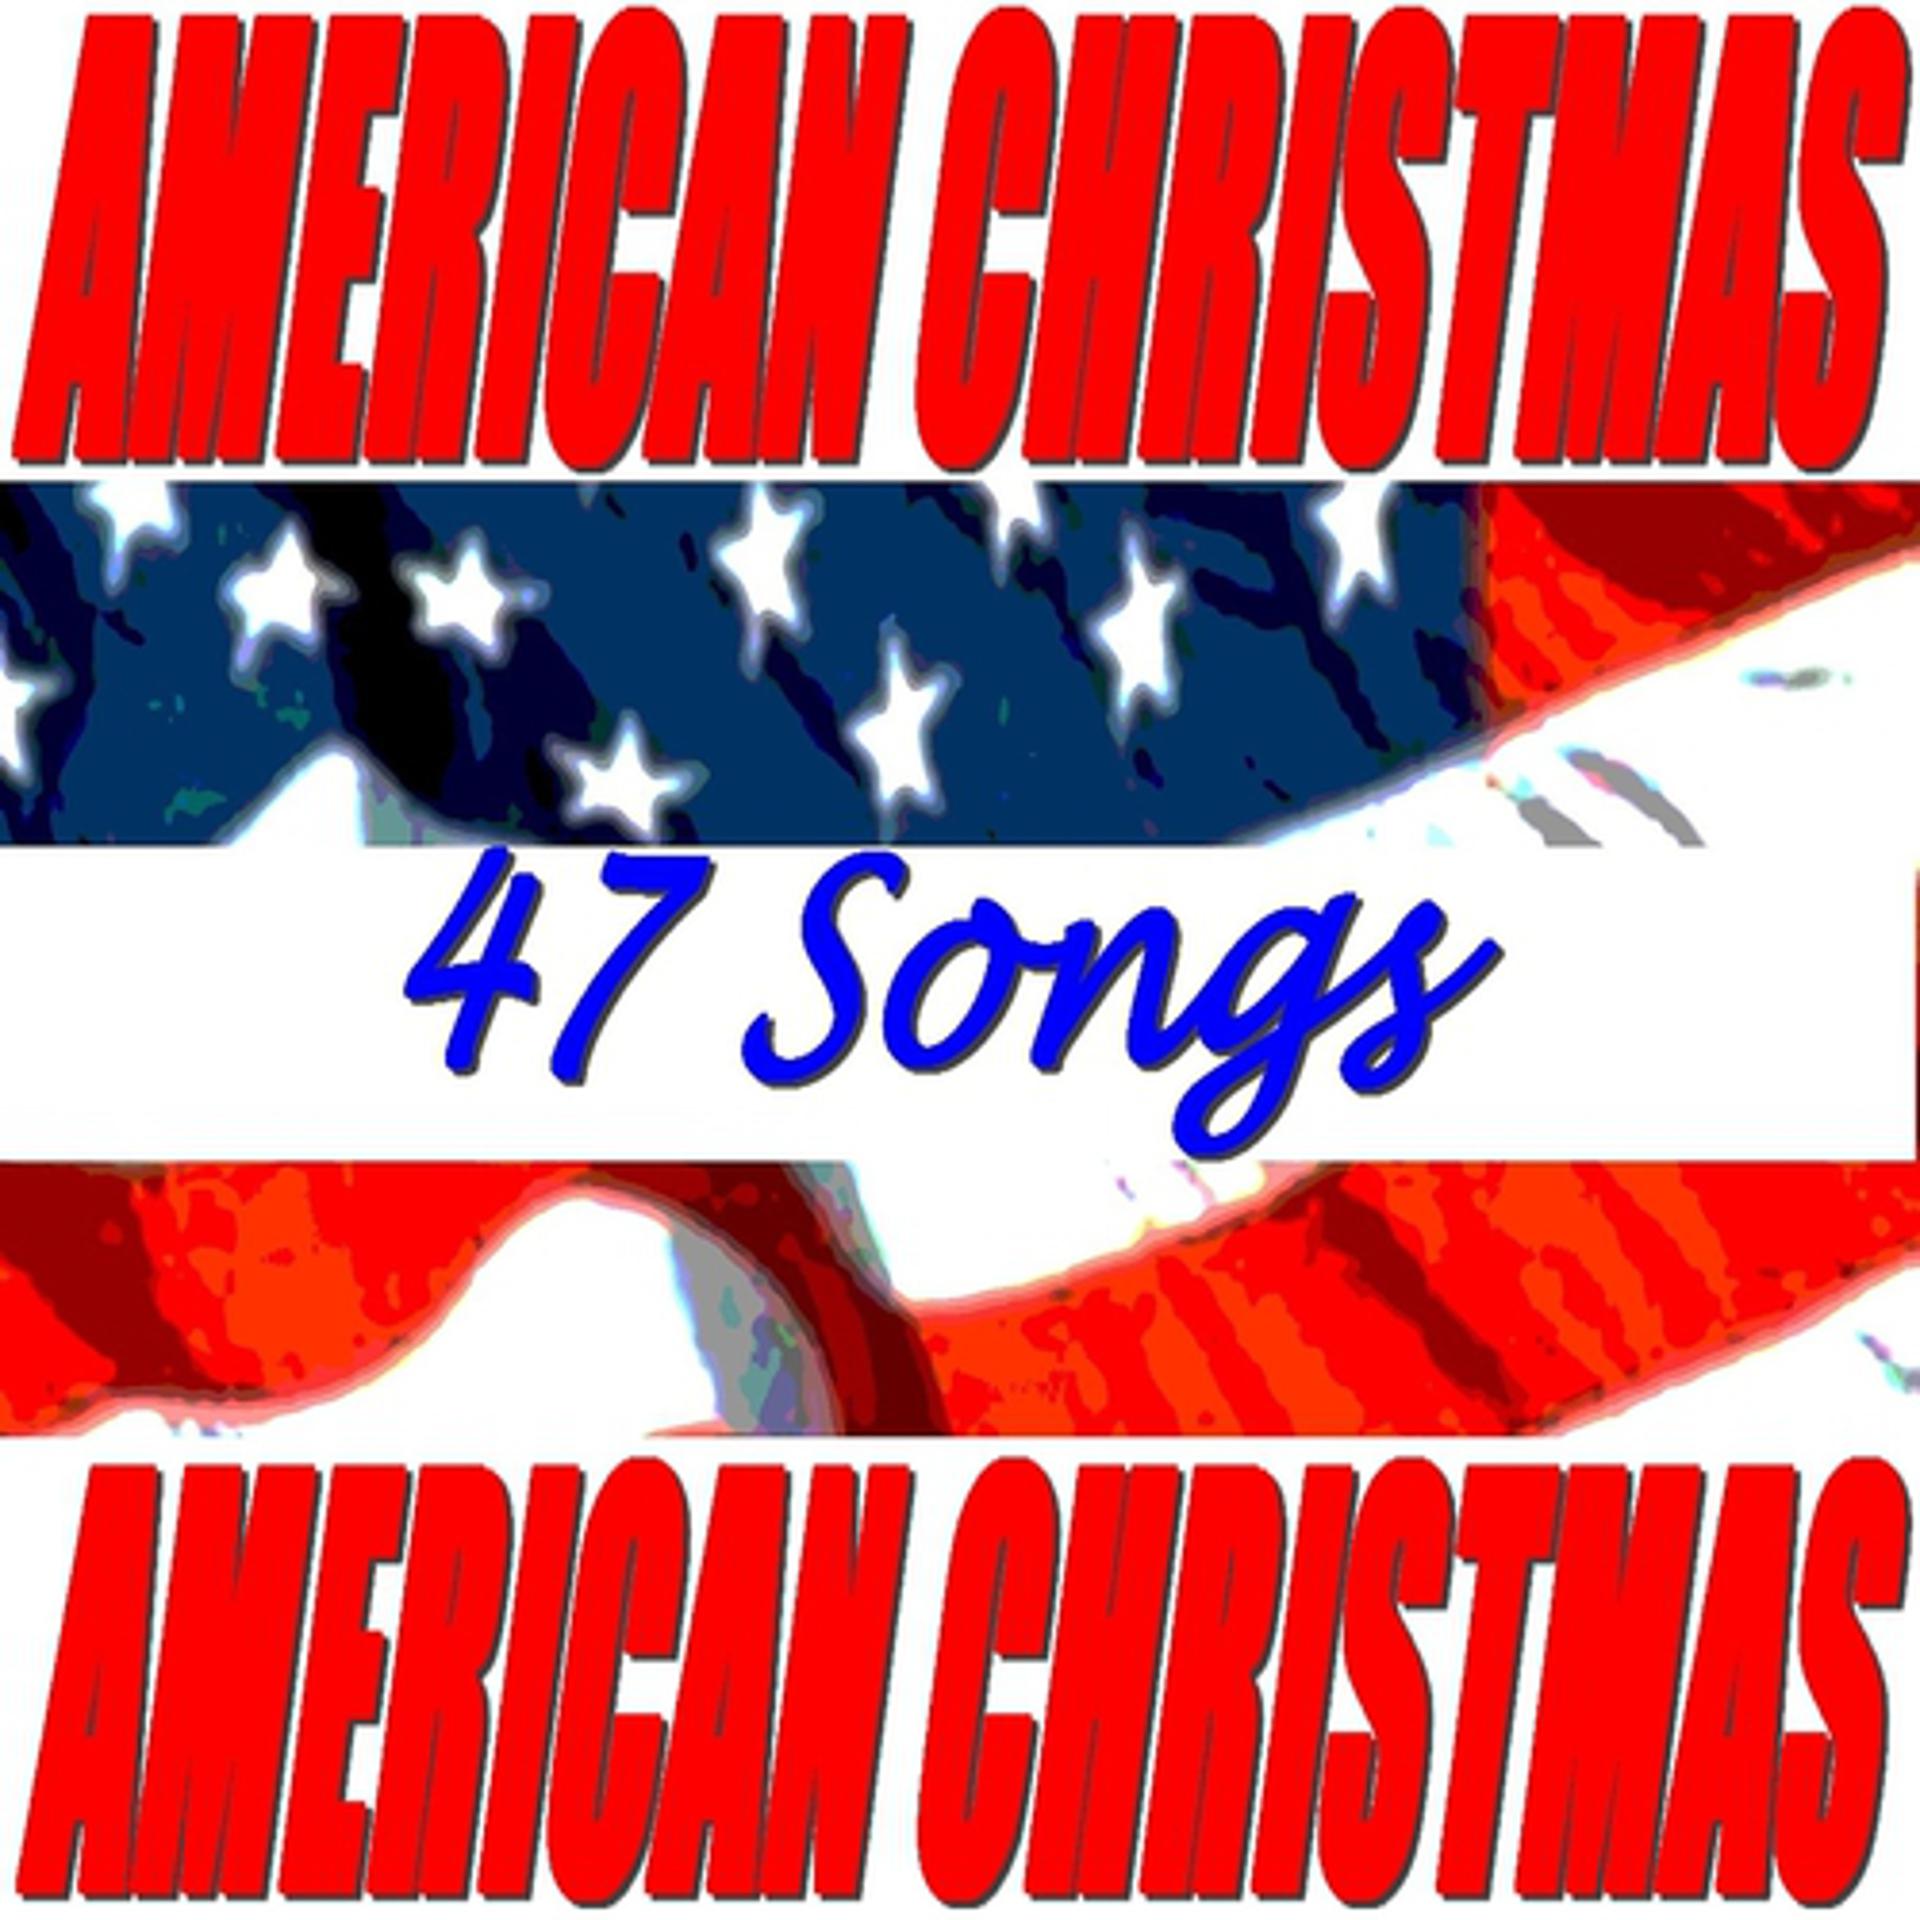 Постер альбома American Christmas